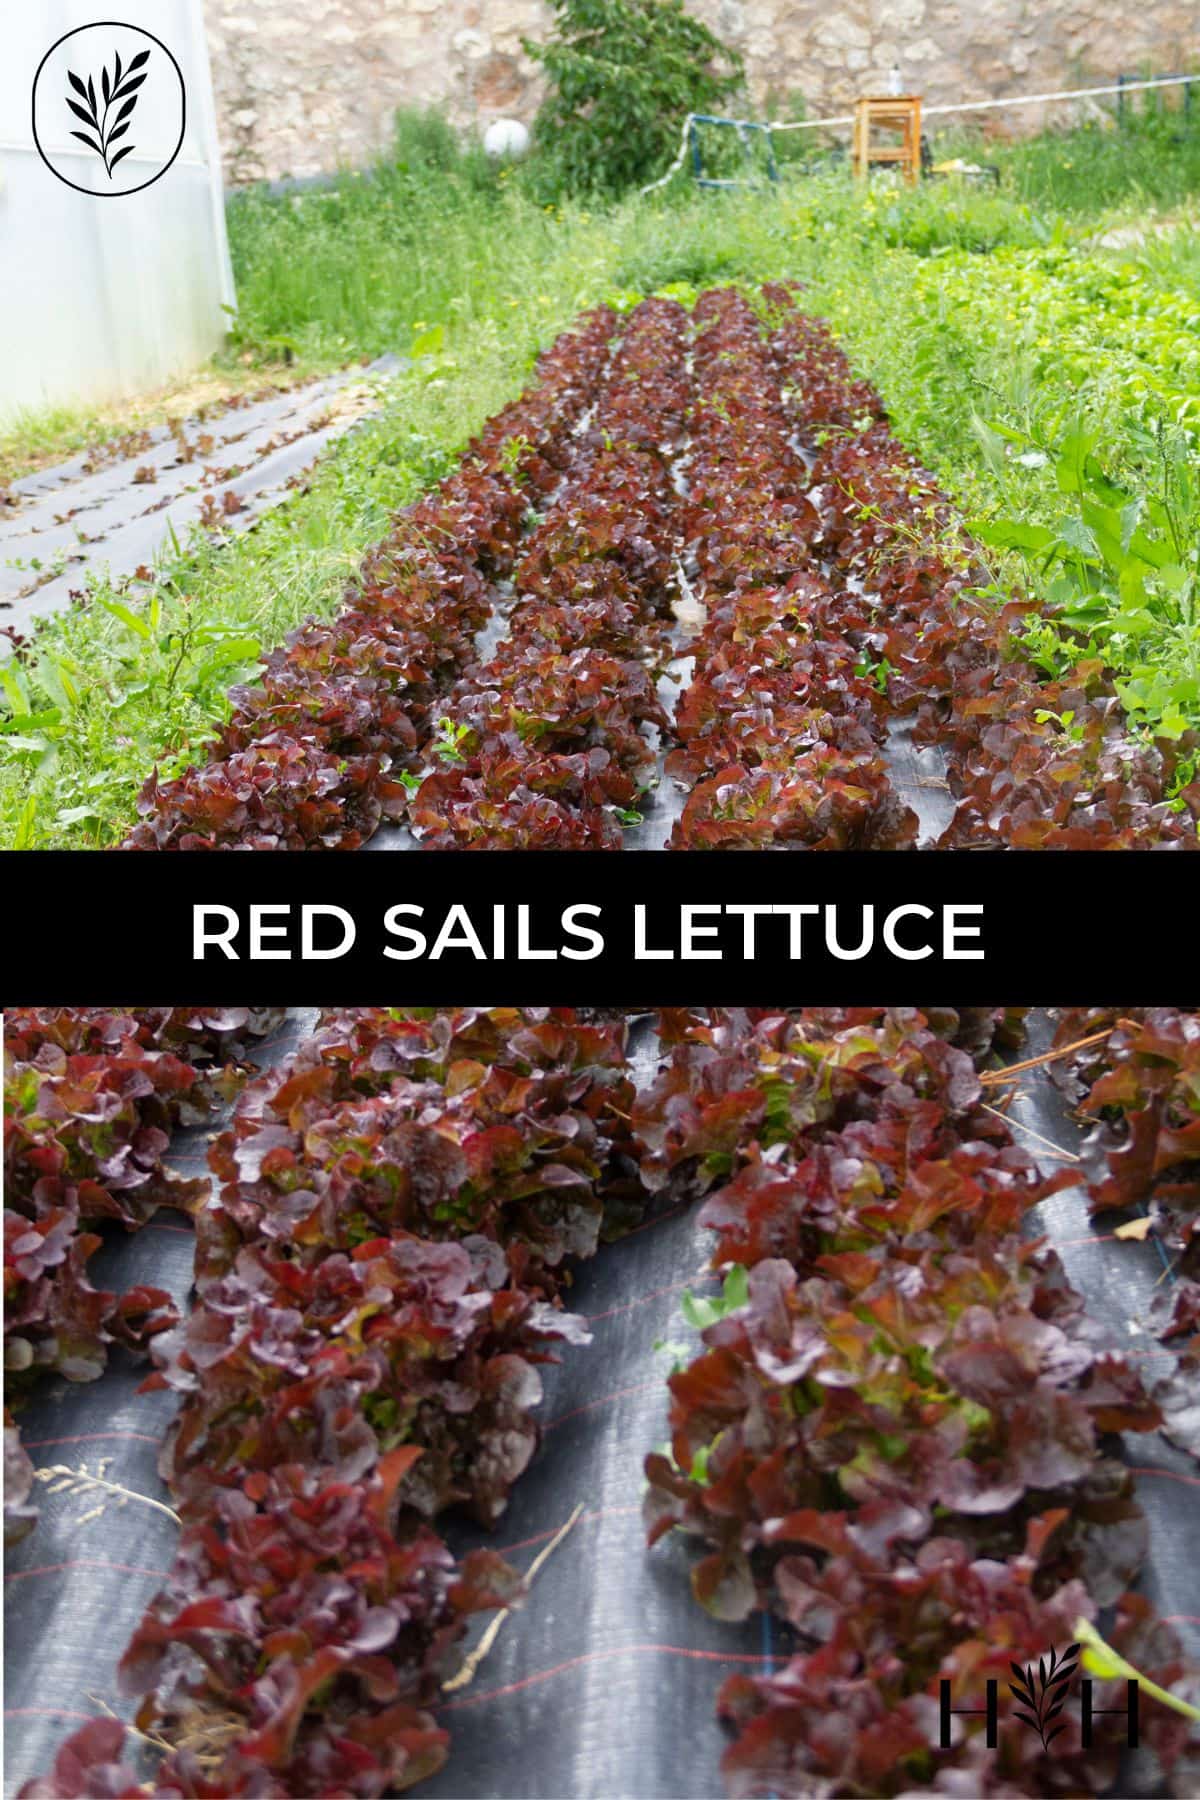 Red sails lettuce via @home4theharvest